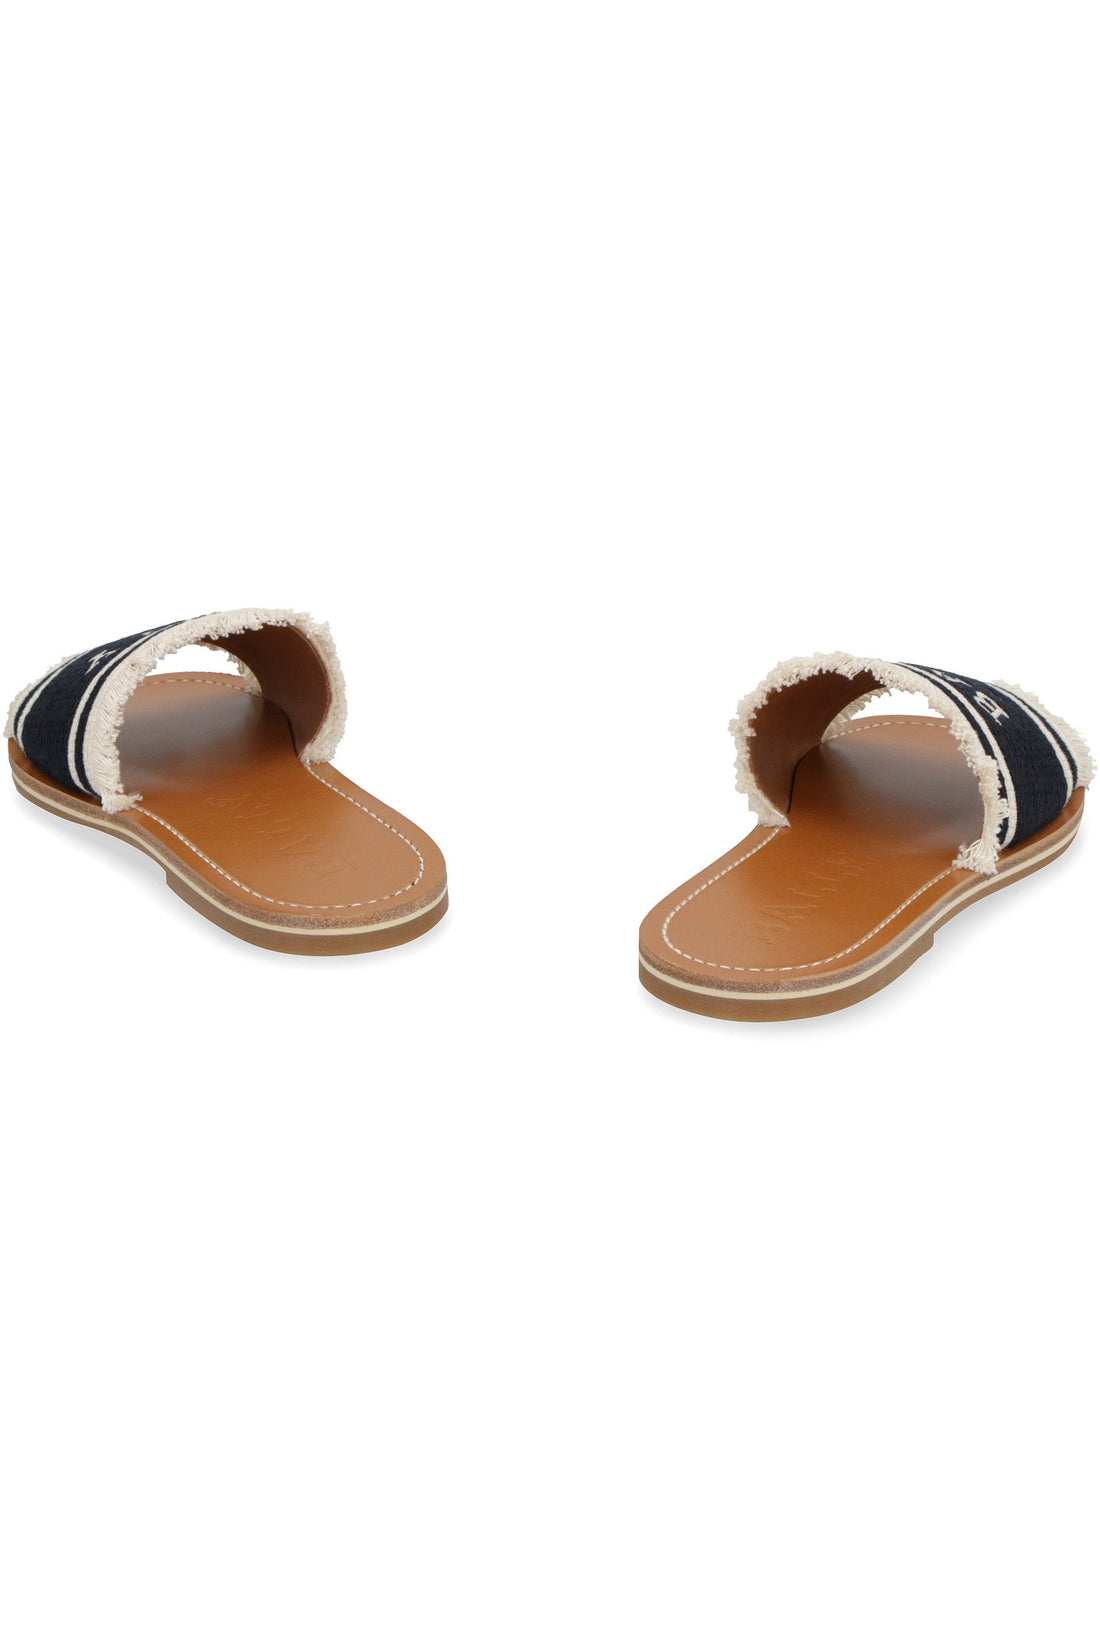 Bally-OUTLET-SALE-Bianca flat sandals-ARCHIVIST